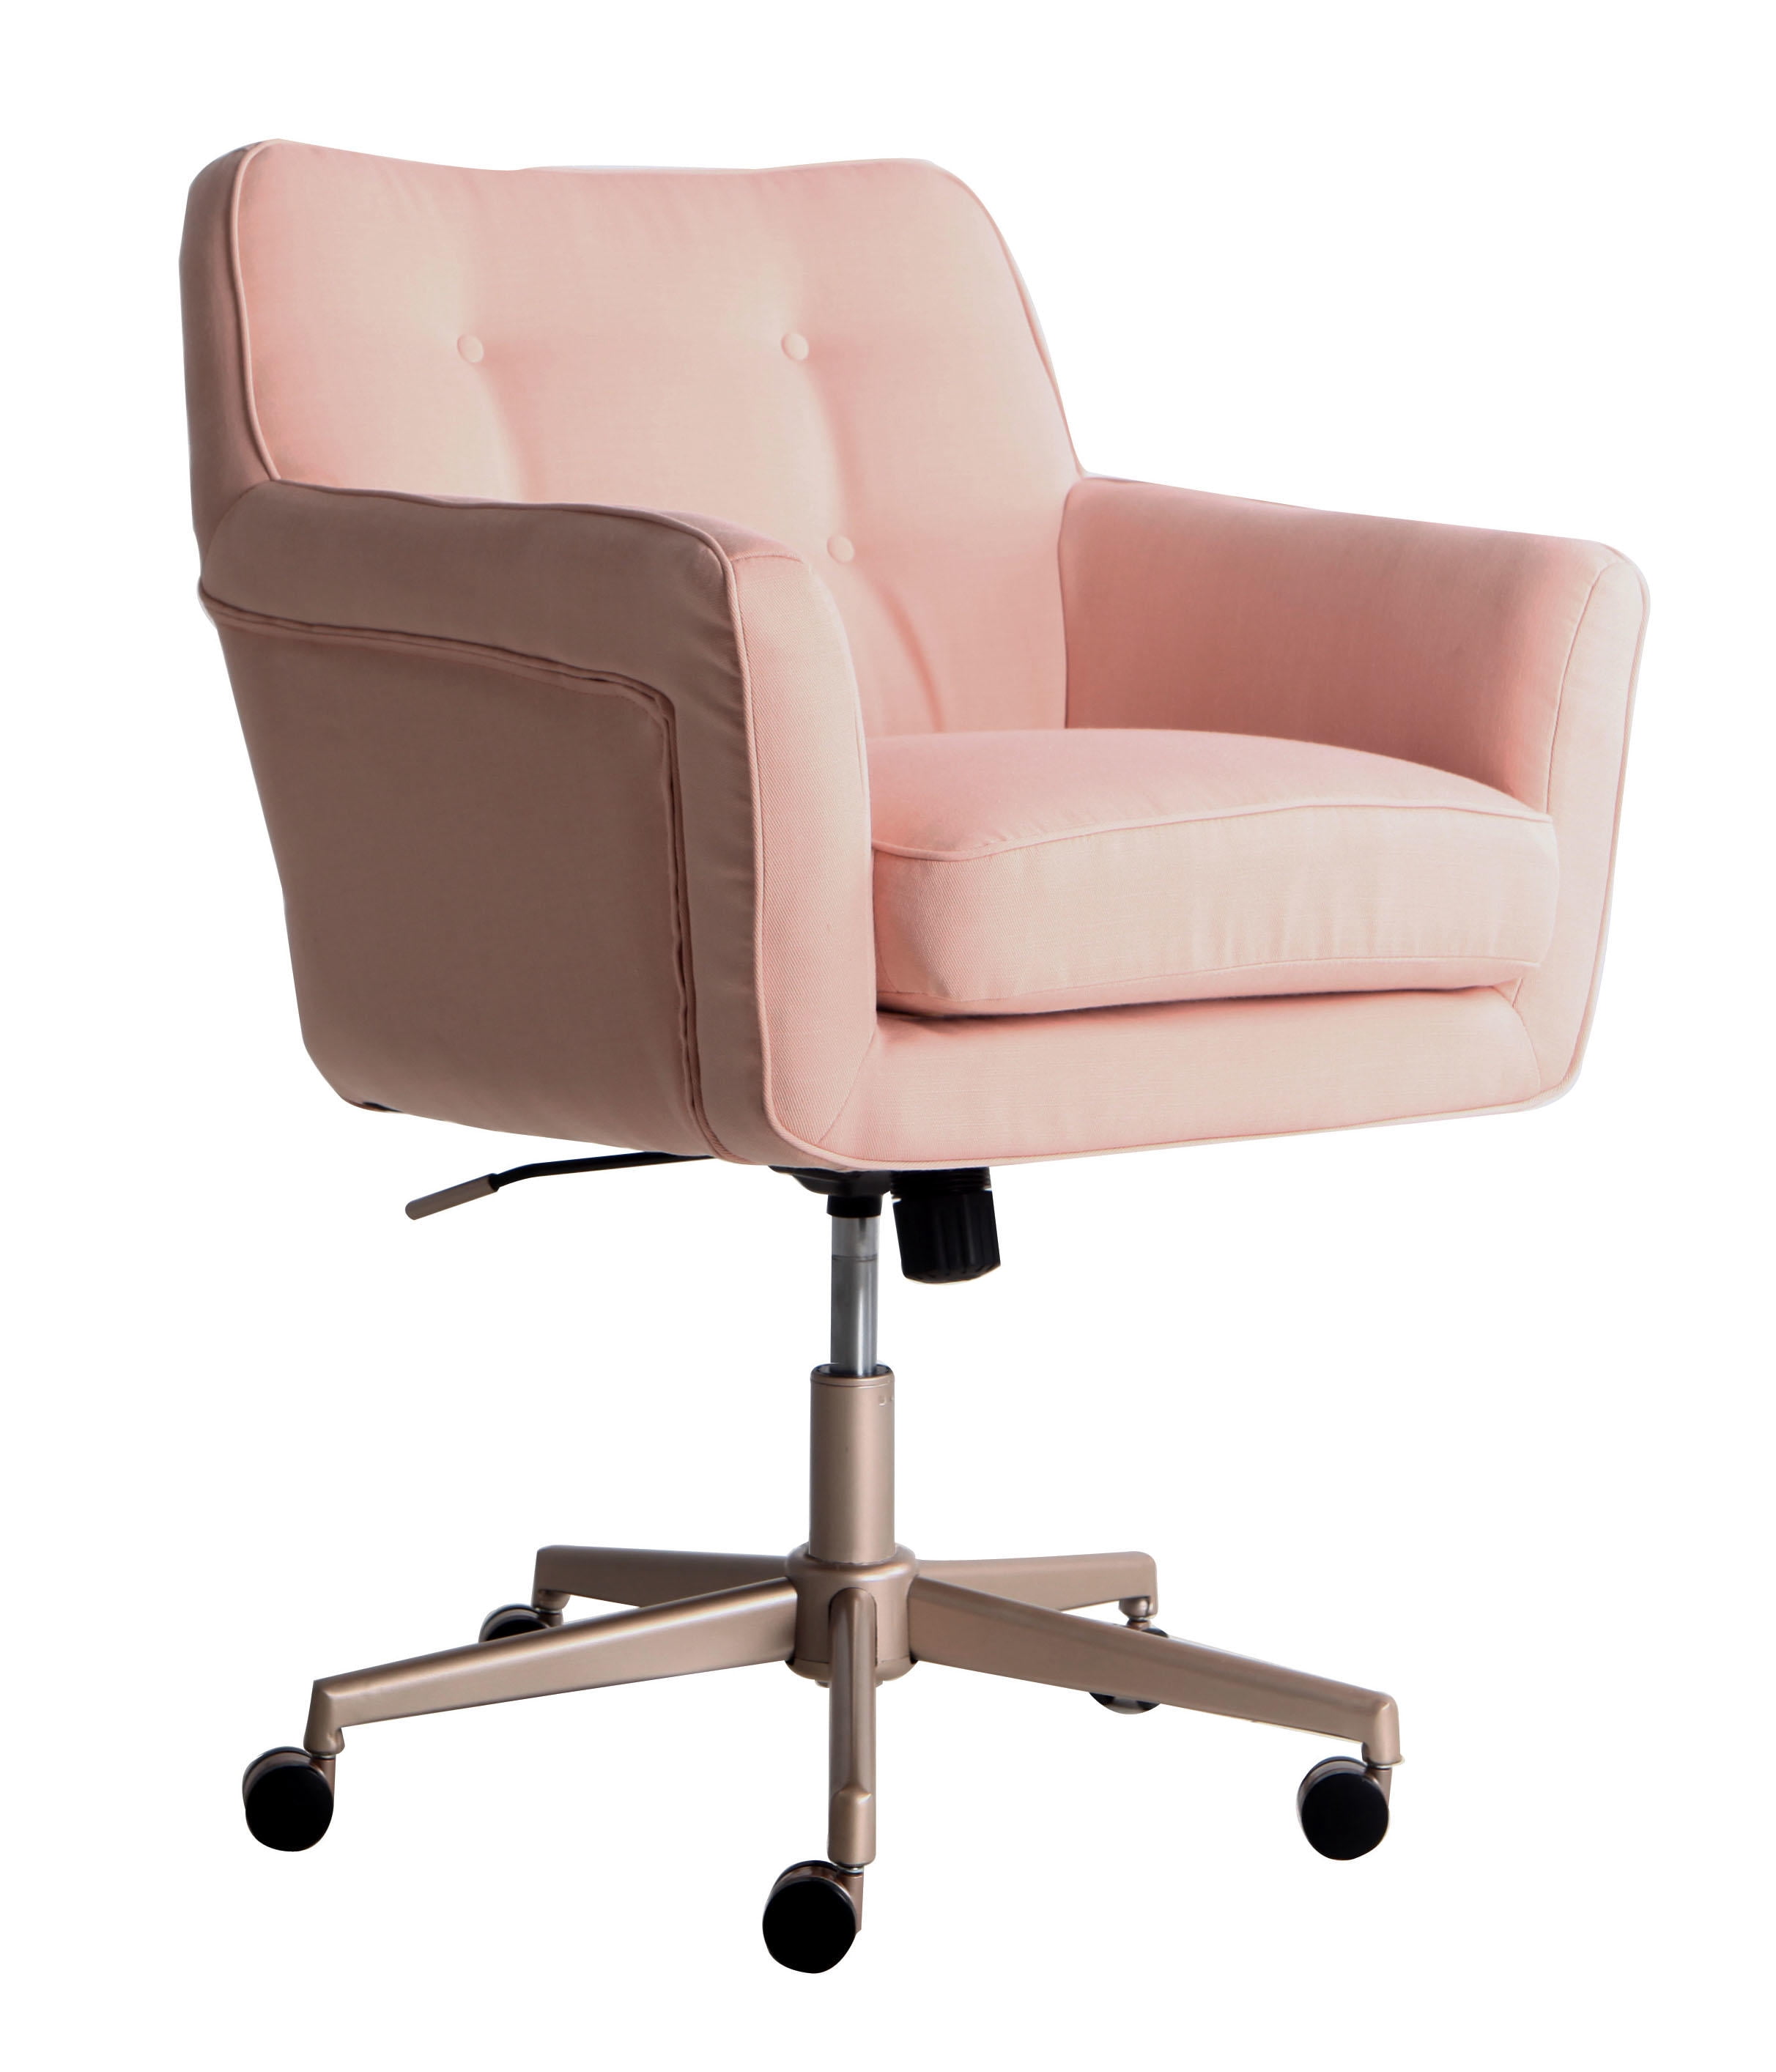 Serta Style Ashland Home Office Chair, Blush Pink Twill ...